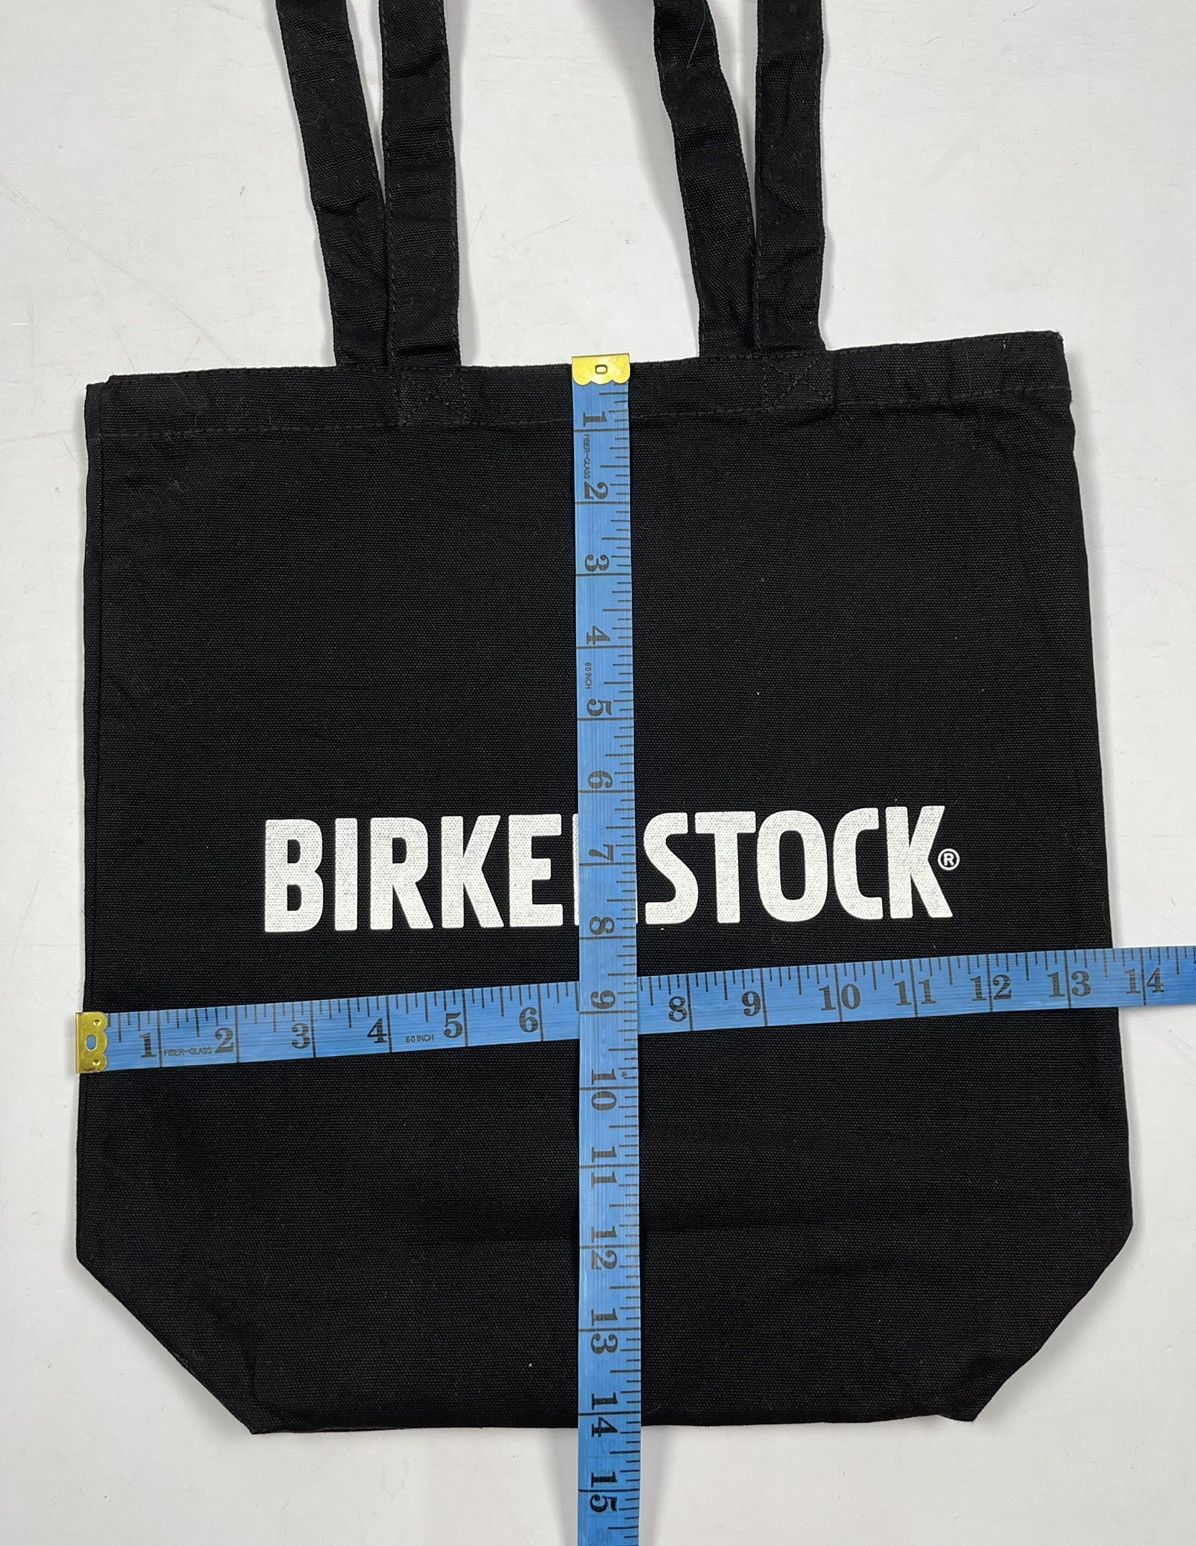 birkenstock tote bag t2 - 4